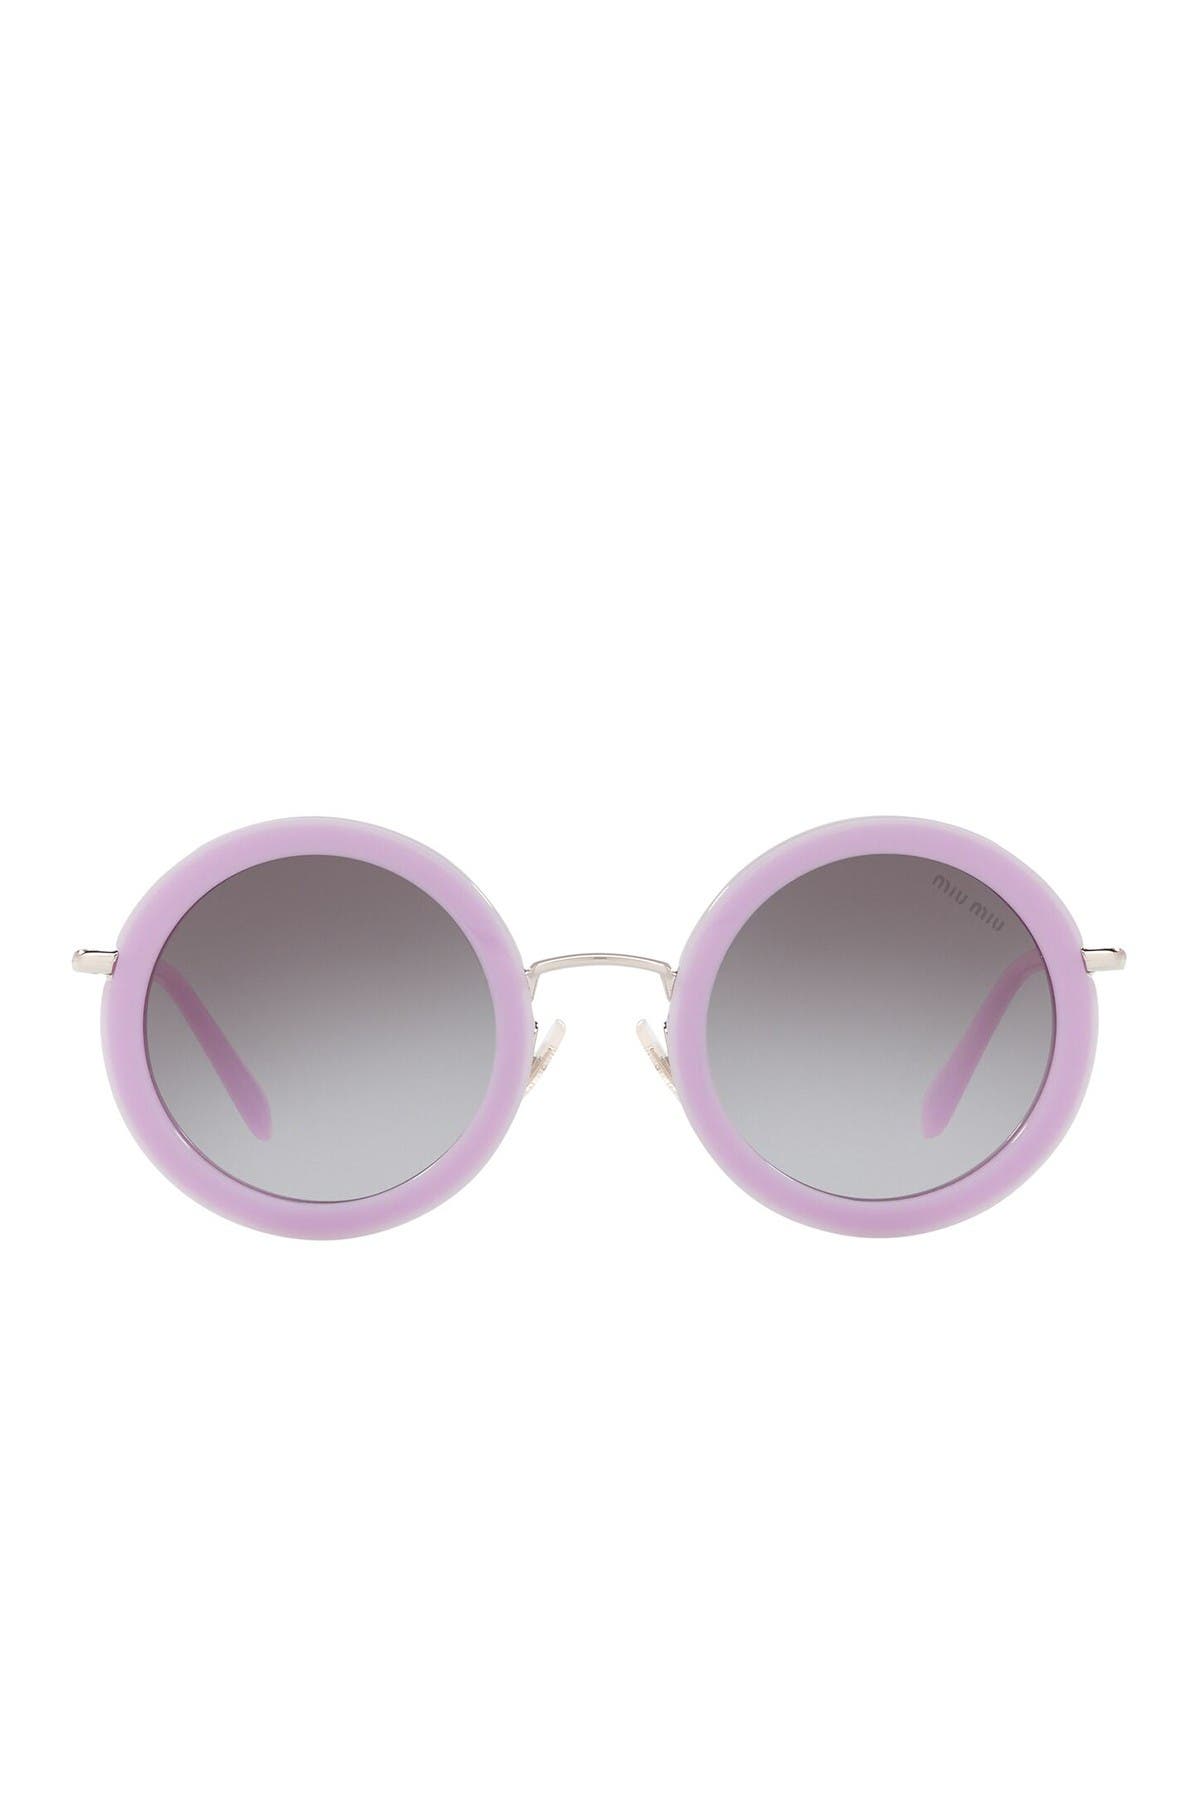 Miu Miu 48mm Round Oversized Sunglasses In Open Miscellaneous35